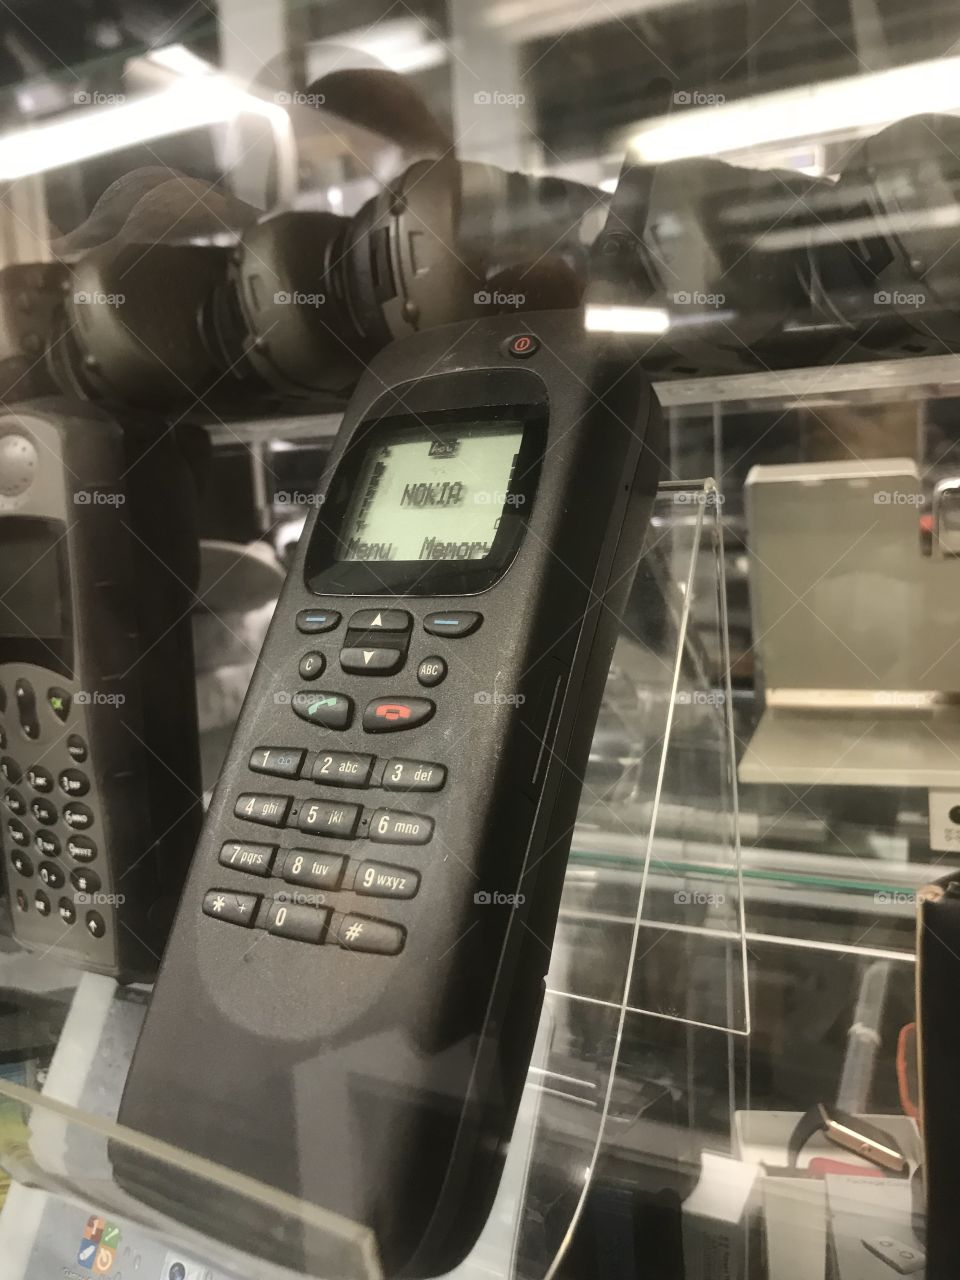 Vintage cellular telephone display. Old black brick style cel phone